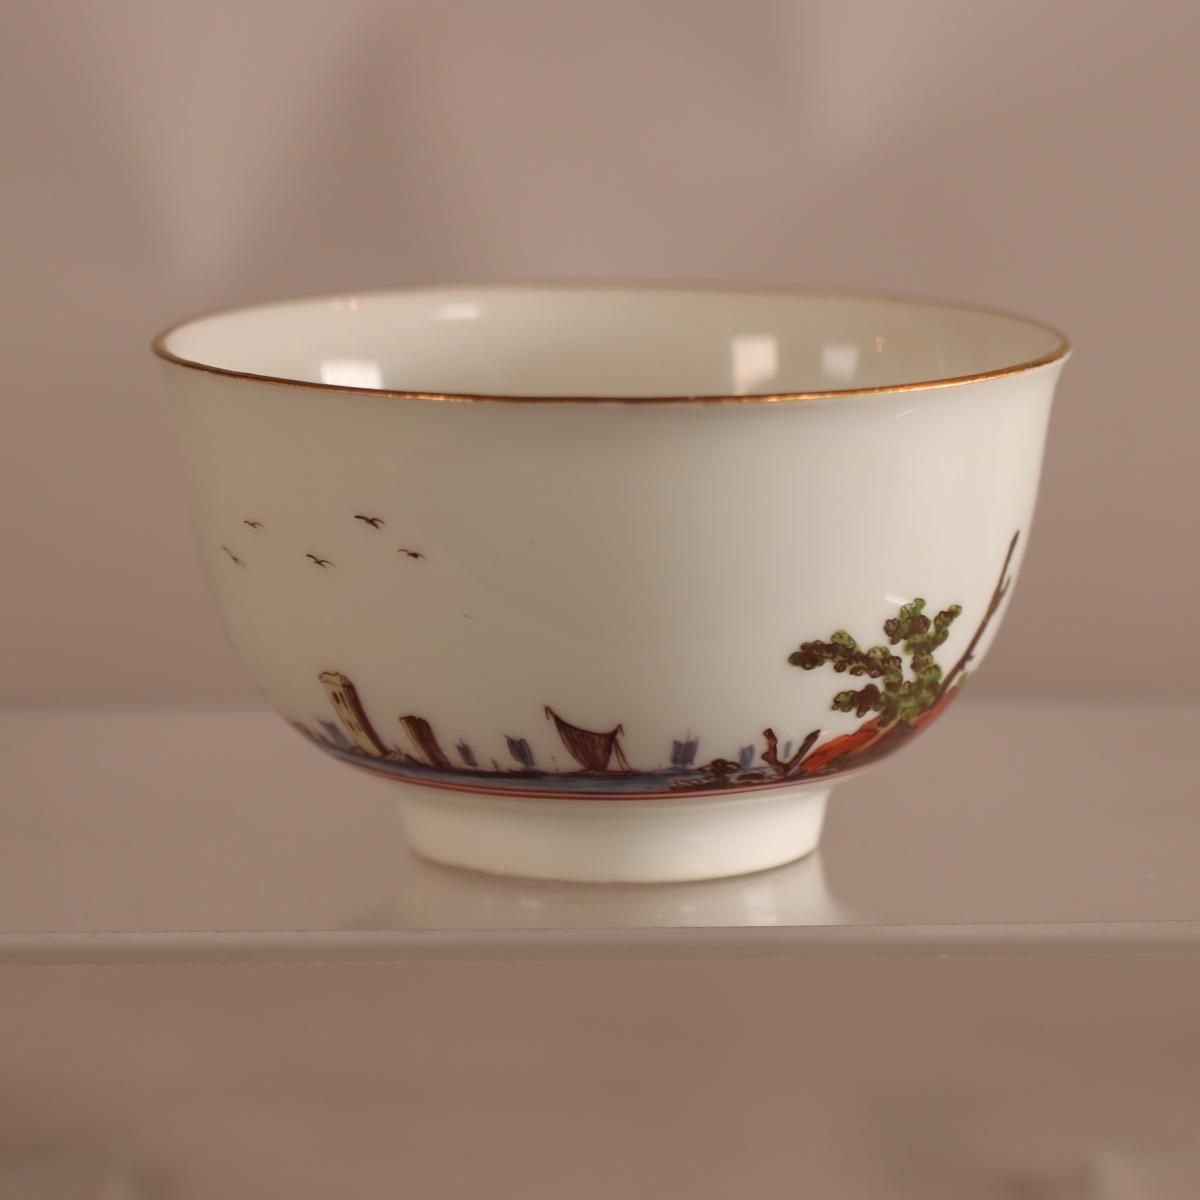 Side of Meissen bowl showing detail